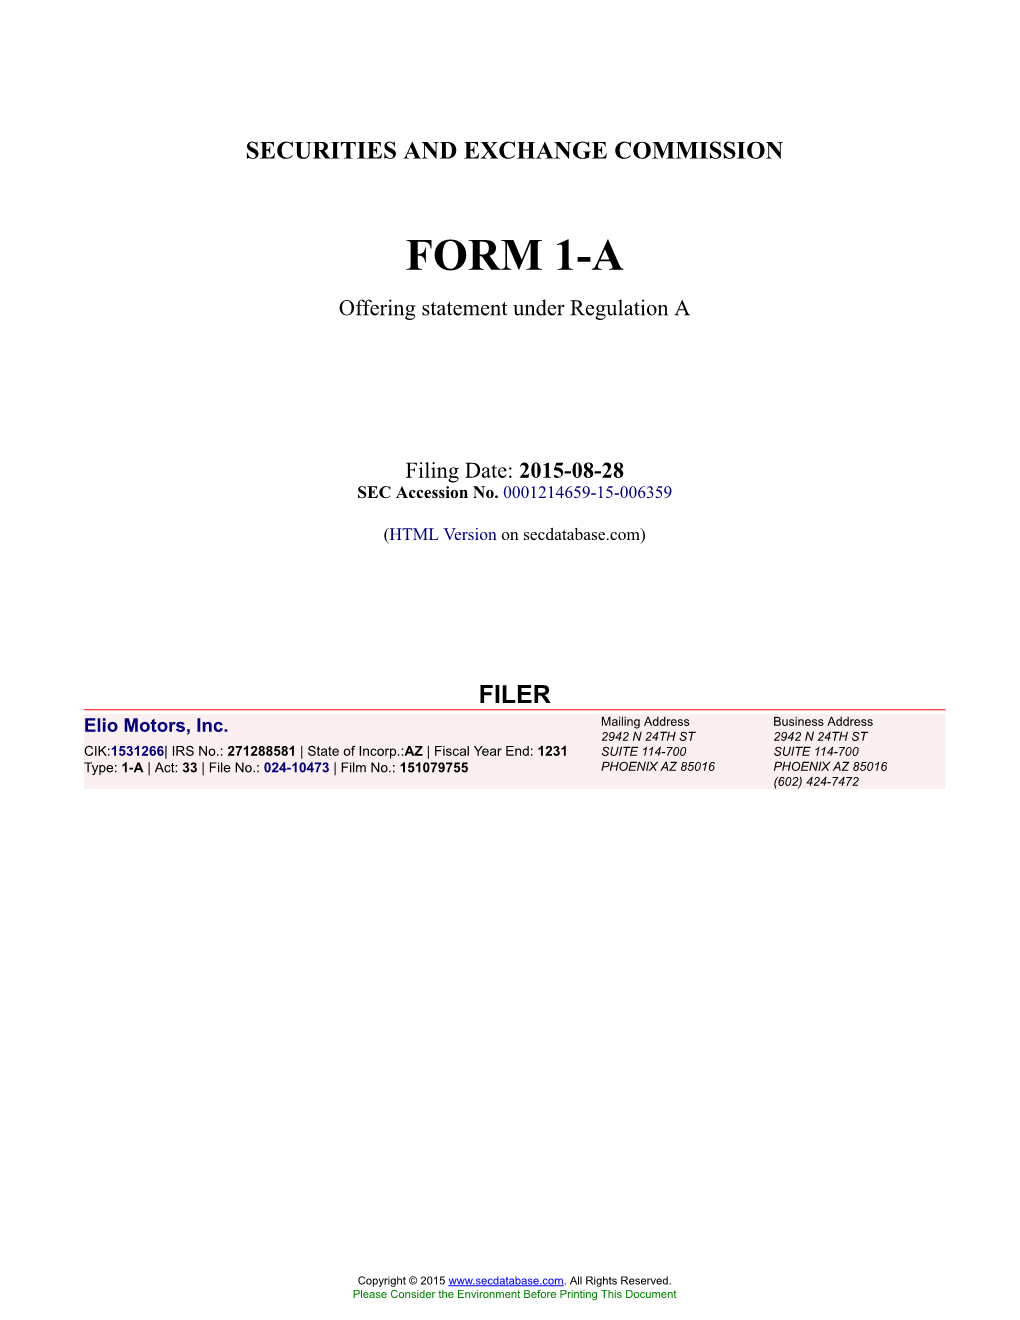 Elio Motors, Inc. Form 1-A Filed 2015-08-28